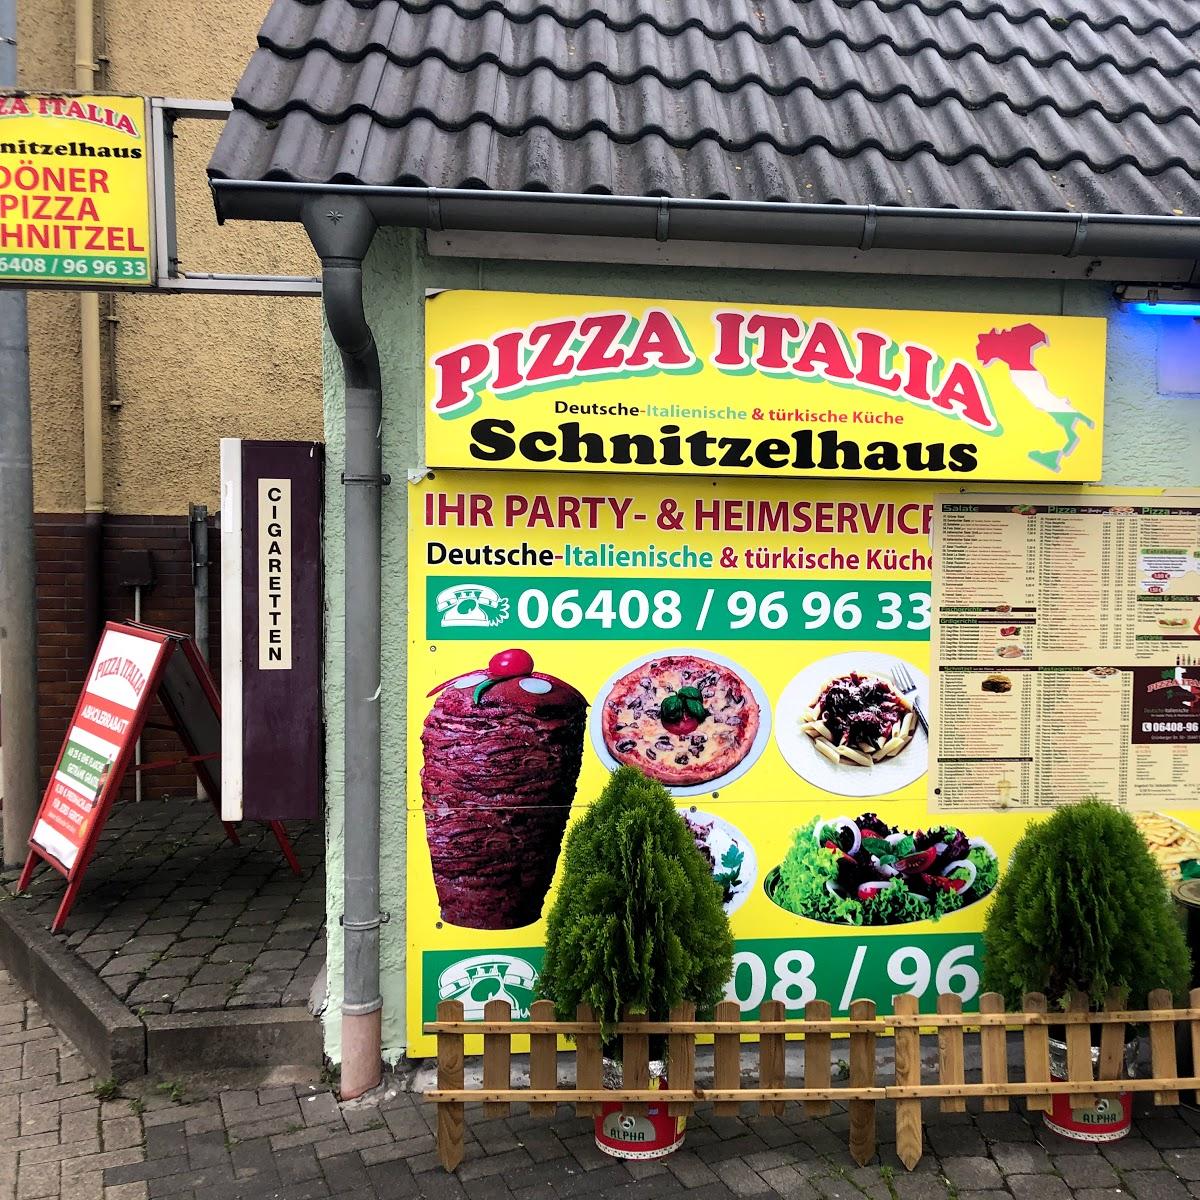 Restaurant "Pizza- Schnitzelhaus Italia" in Reiskirchen